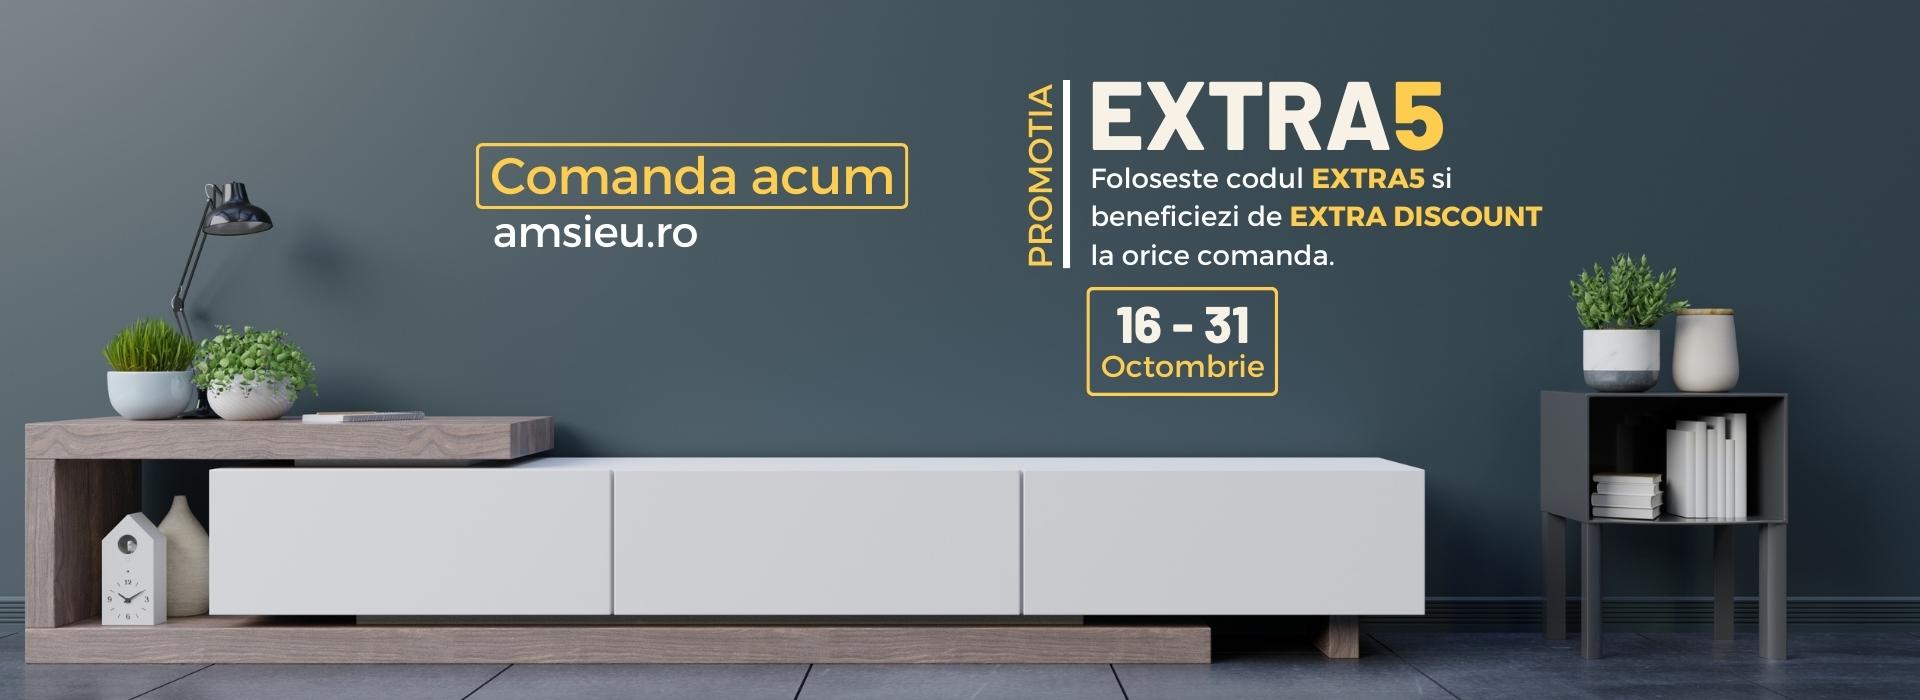 Promotia EXTRA5 Discount la amsieu.ro